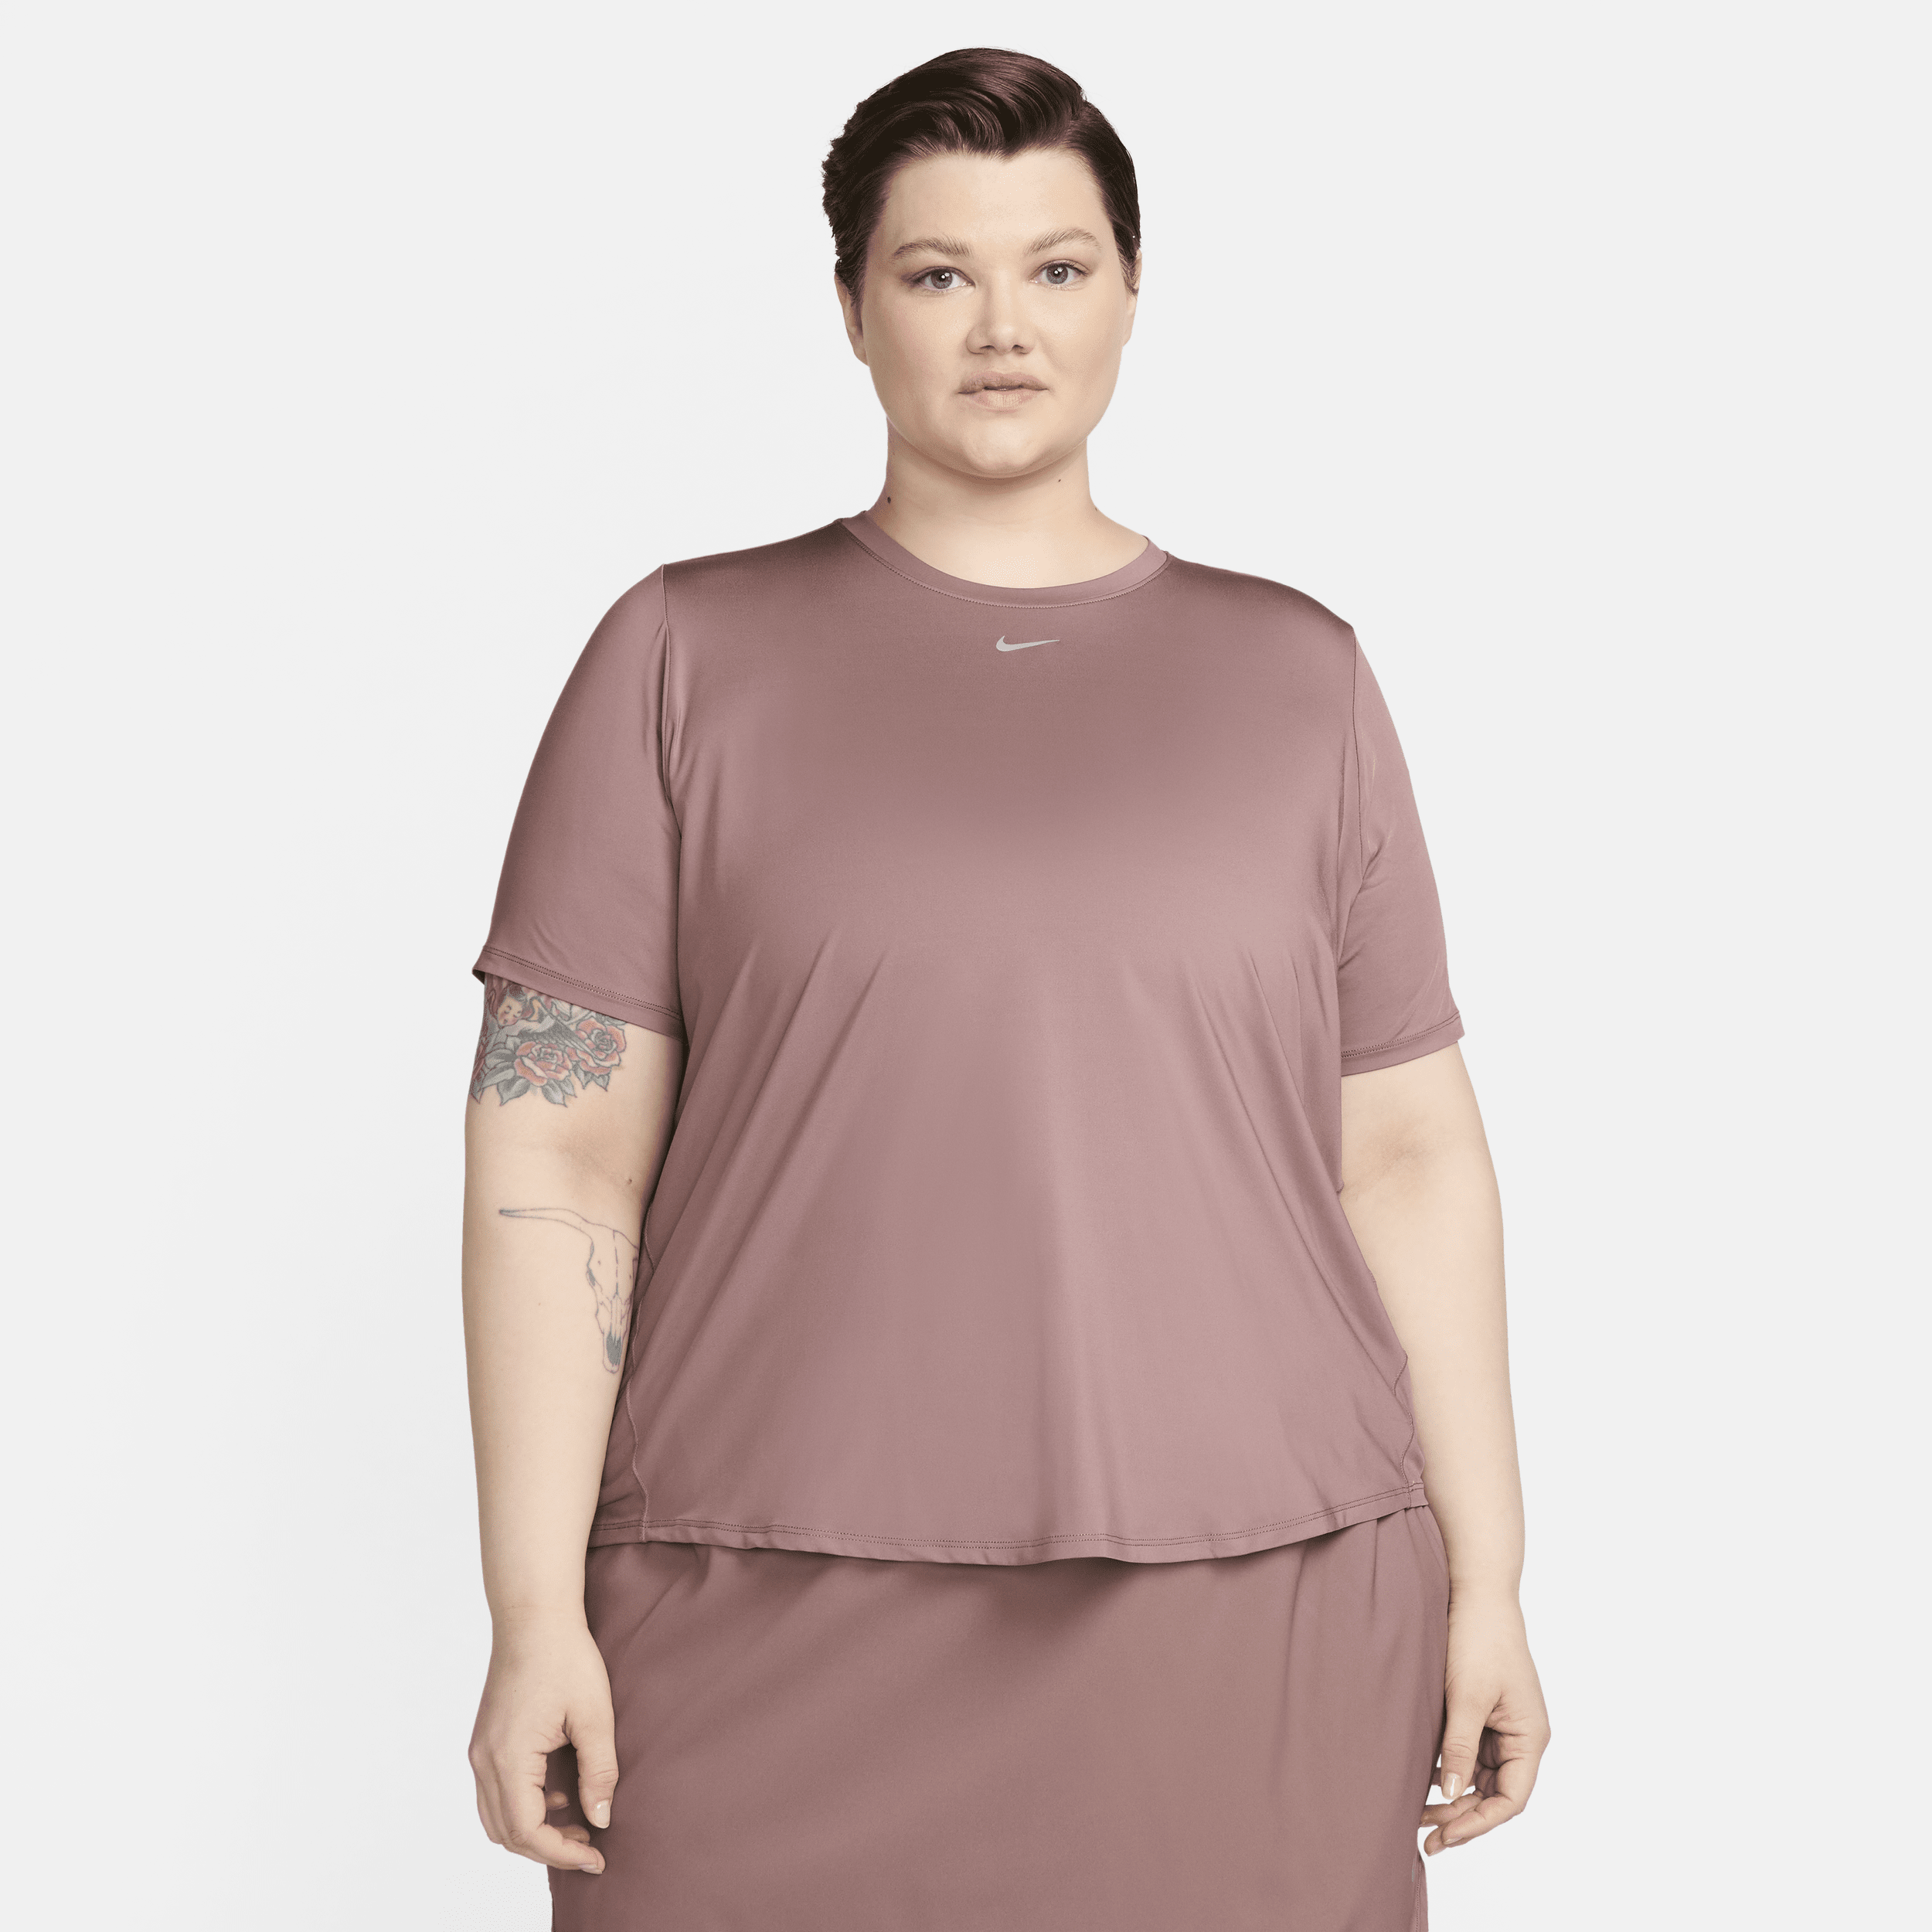 Nike Women's One Classic Dri-fit Short-sleeve Top (plus Size) In Purple